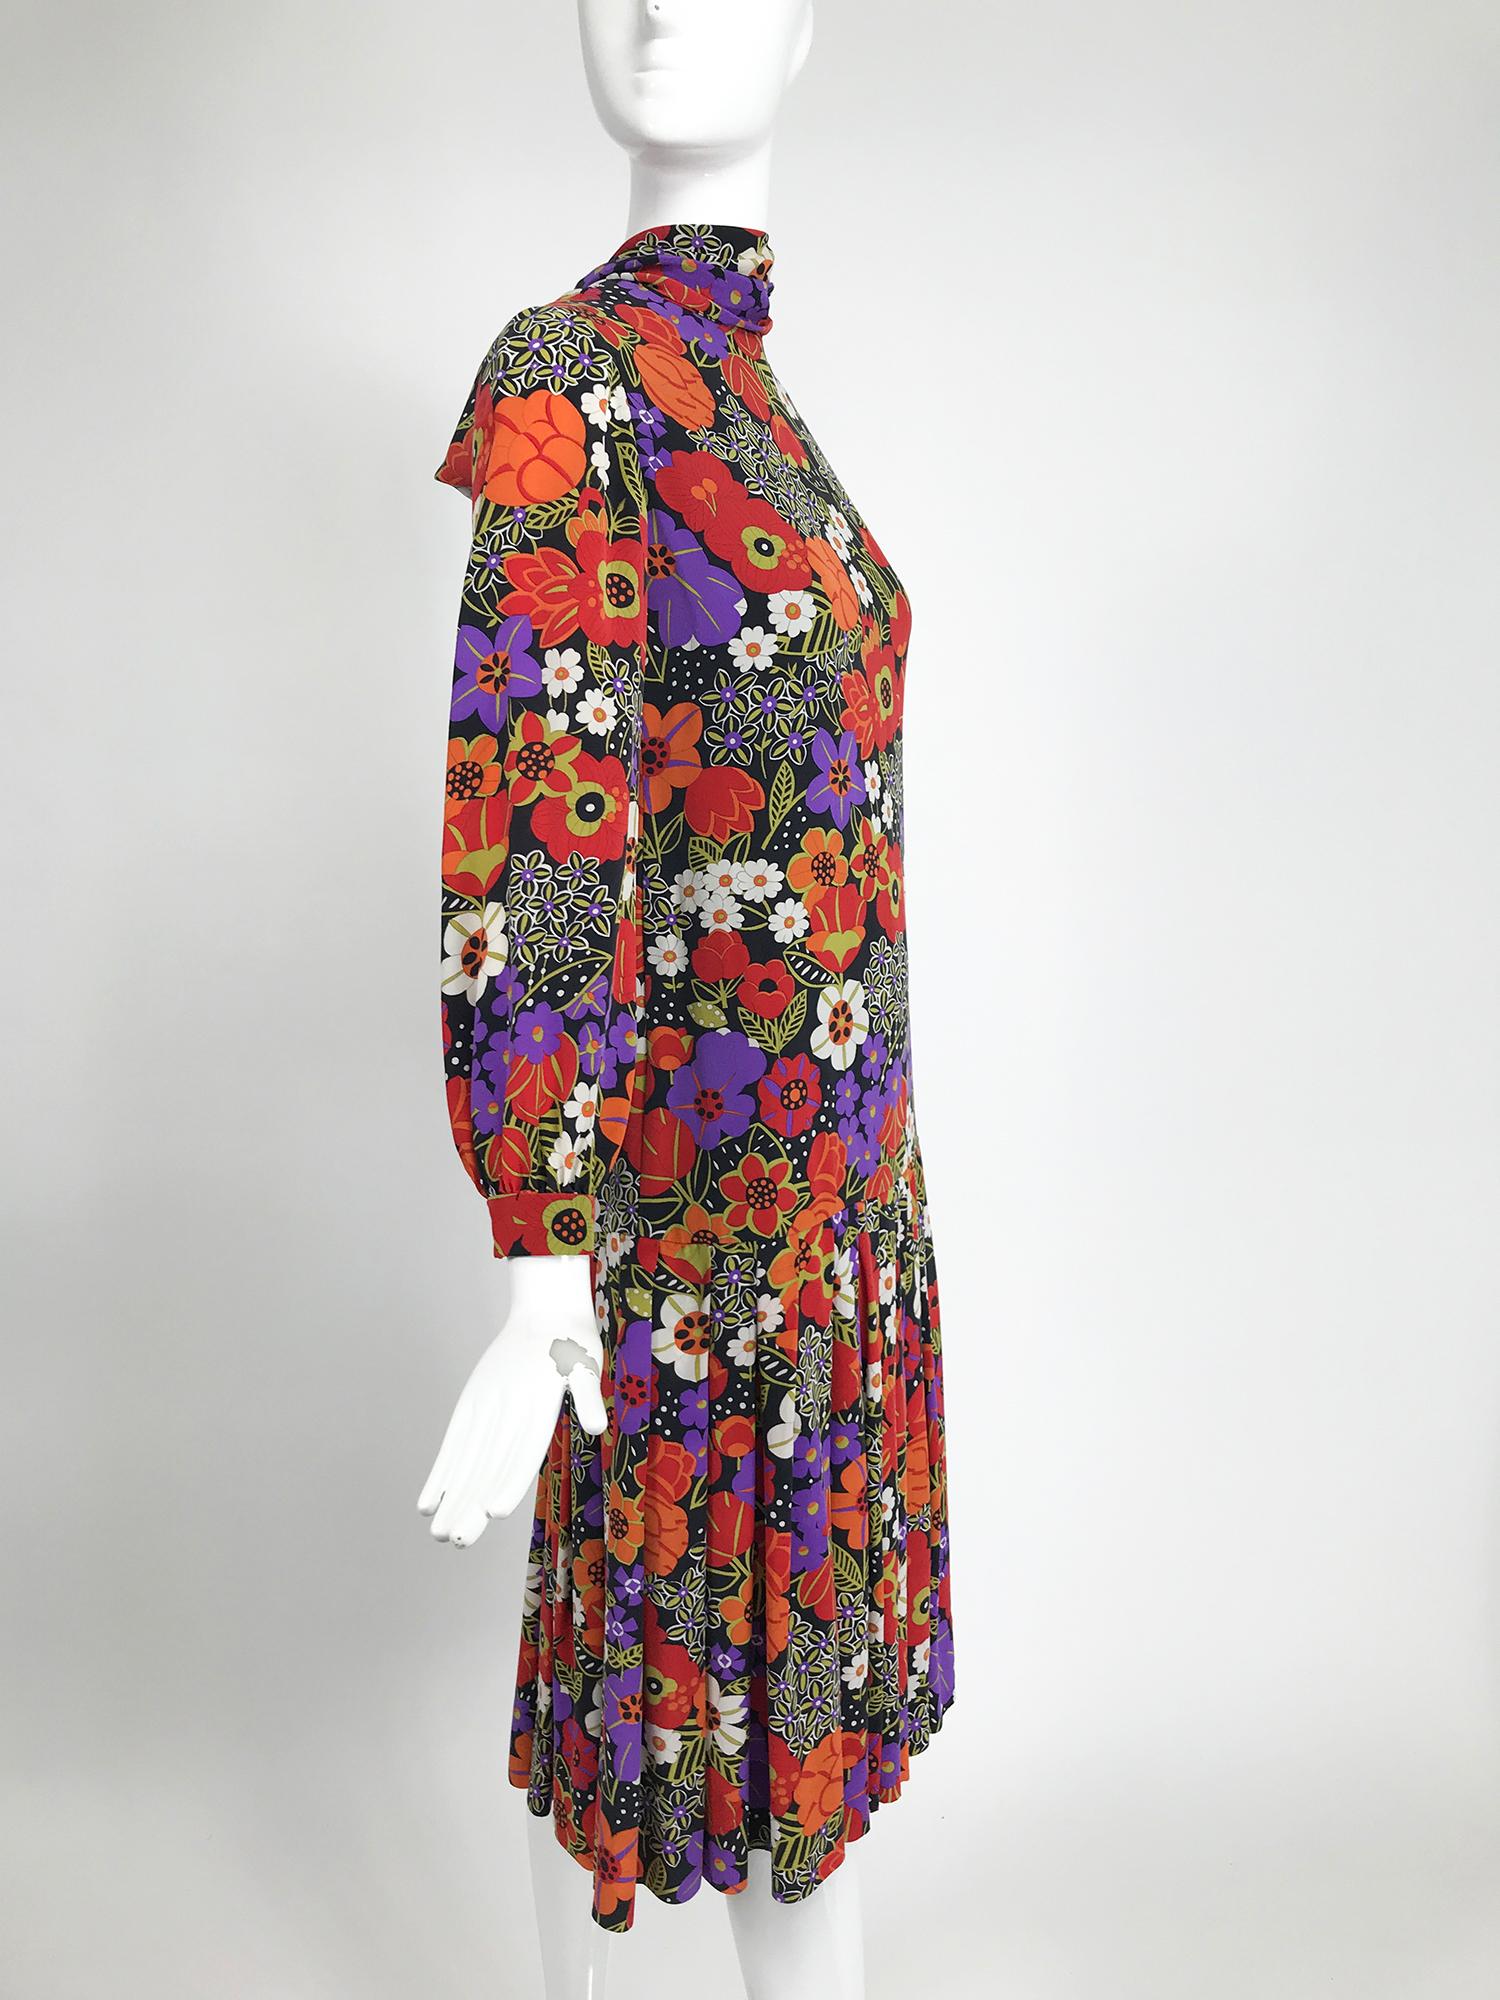 Women's Oscar de la Renta Floral Silk Crepe Drop Waist Dress Late 1960s